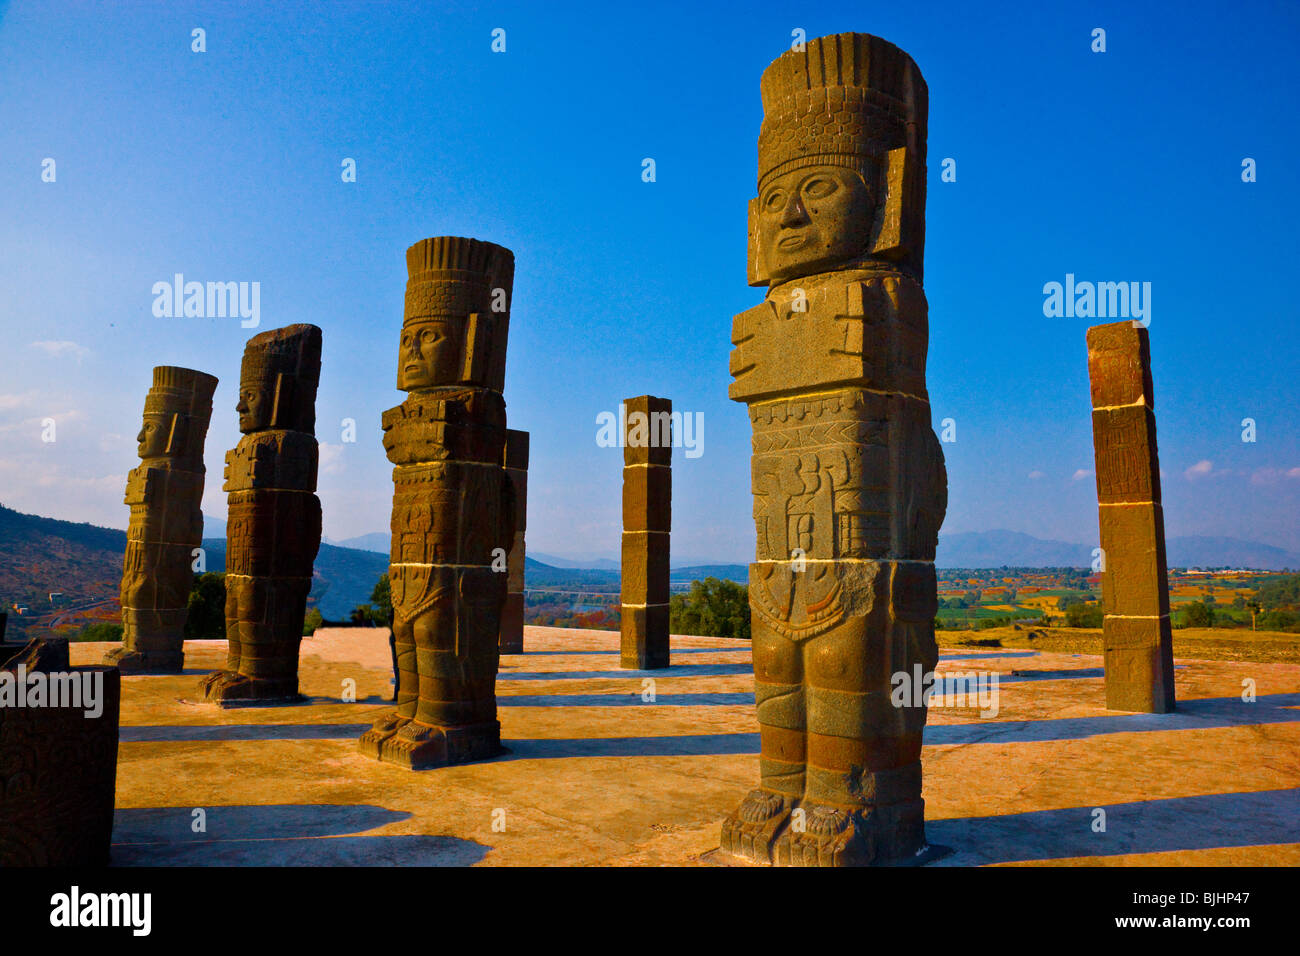 Tula Atlante guerreros, Parque Nacional de Tula, México, enormes estatuas encima pirámide B, la legendaria capital Tolteca, 900 A.C. Foto de stock